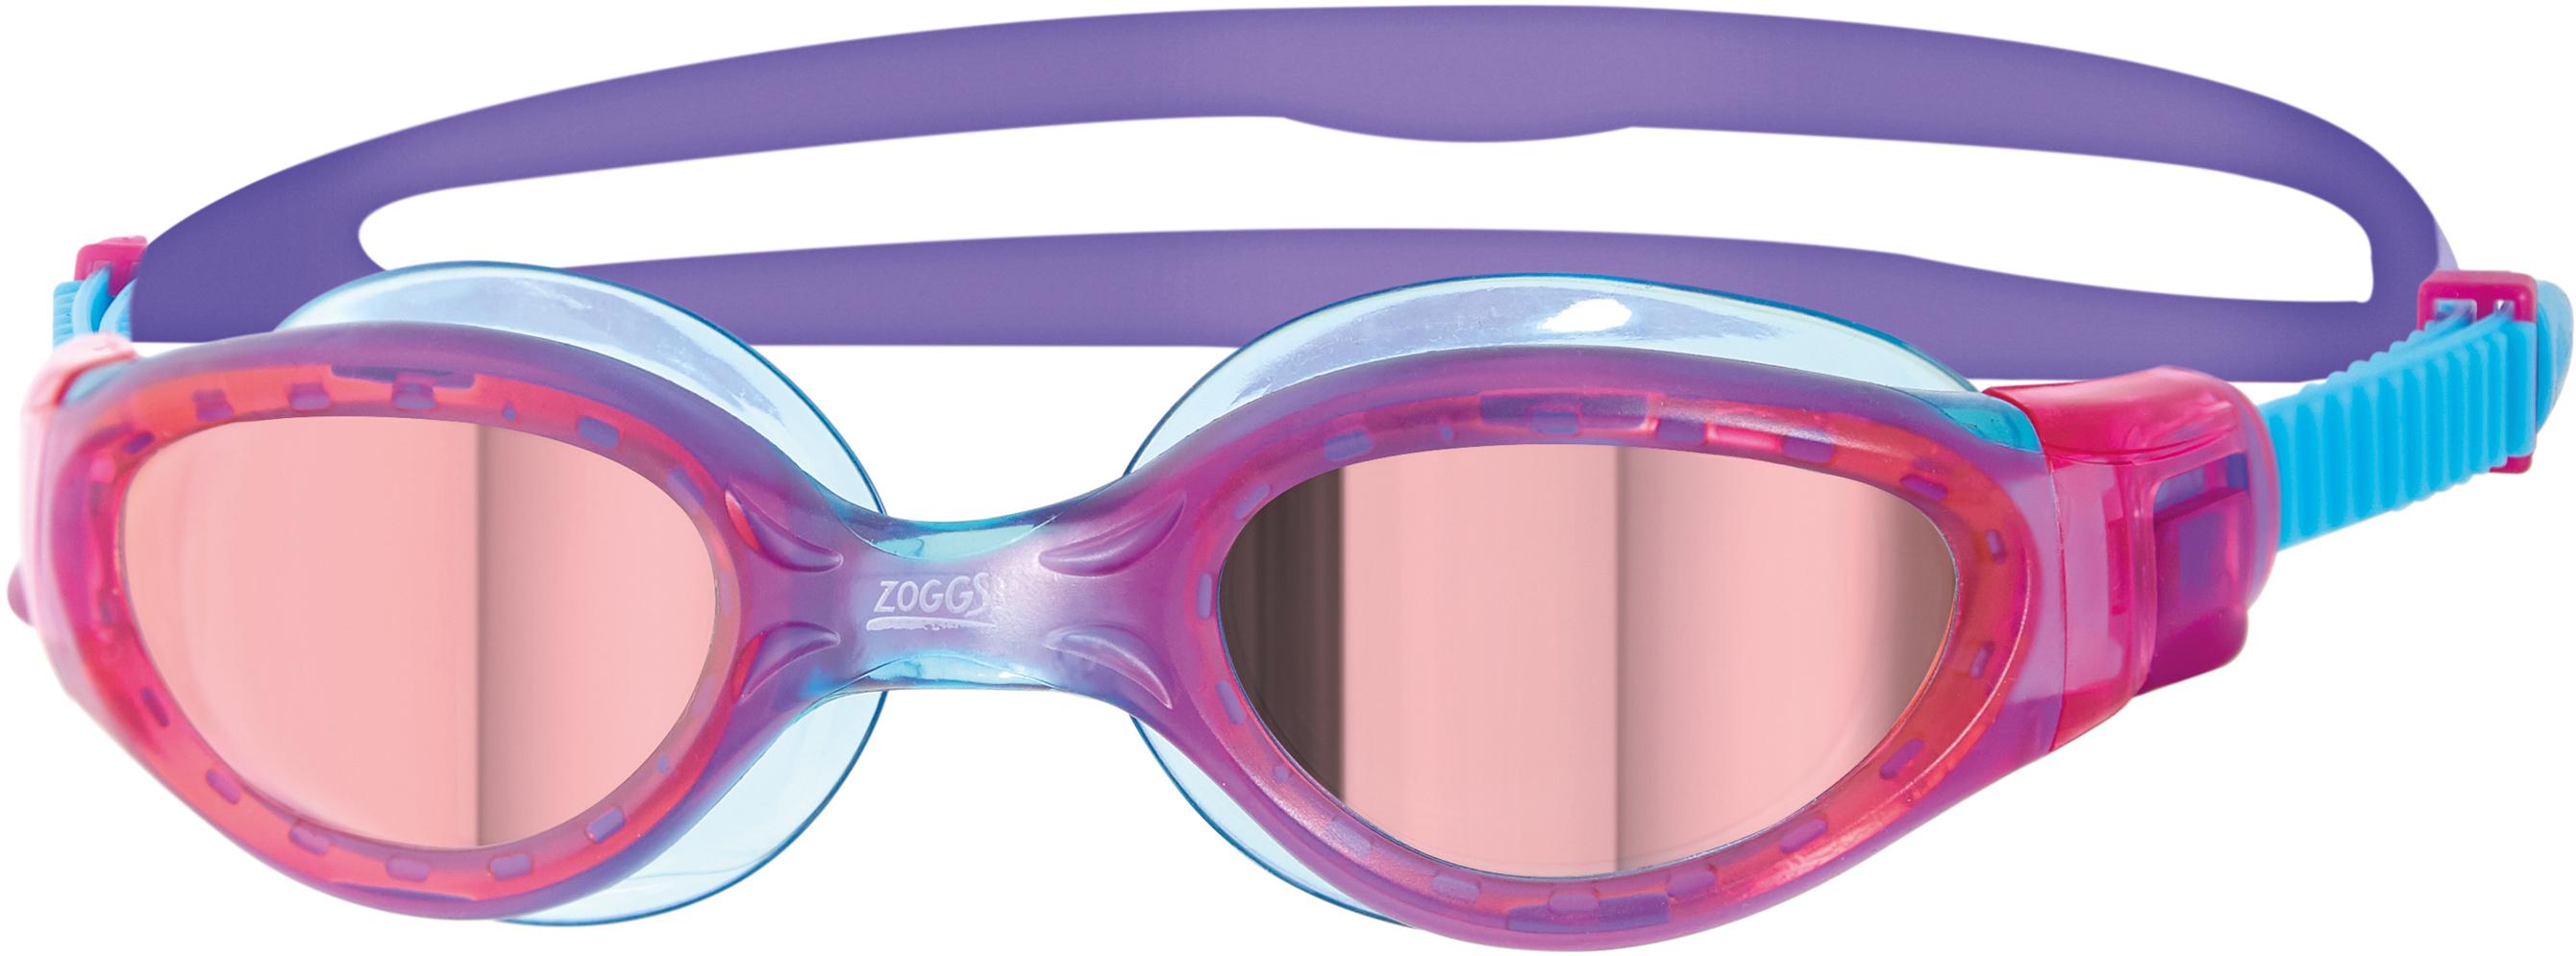 Zoggs Junior Phantom Elite Mir Goggle - Pink/purple/mirror